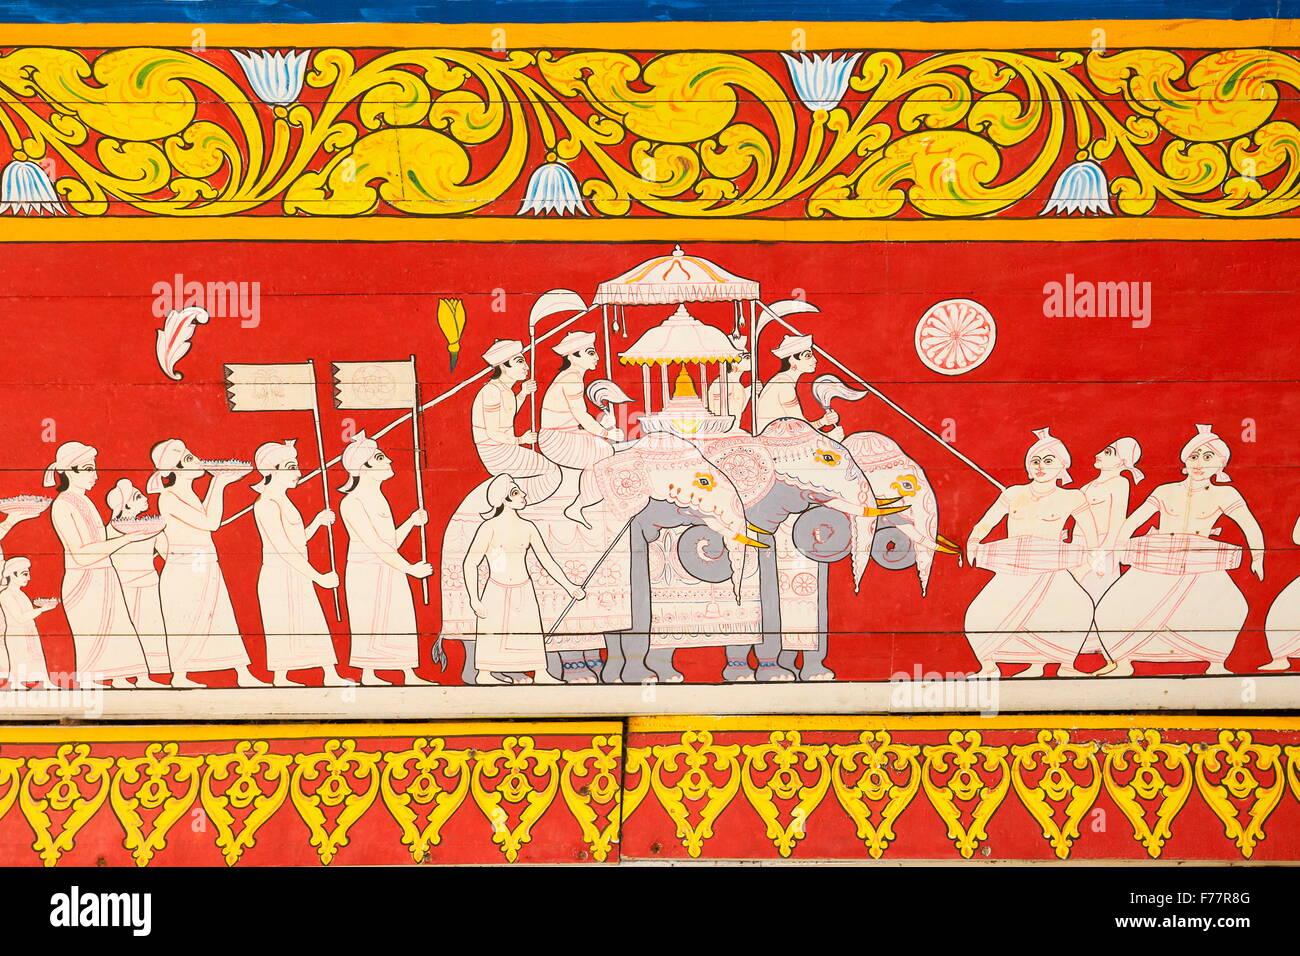 Sri Lanka - Temple de la dent, Kandy, Sri Dalada Maligawa, sanctuaire bouddhiste, scène peinture murale Banque D'Images